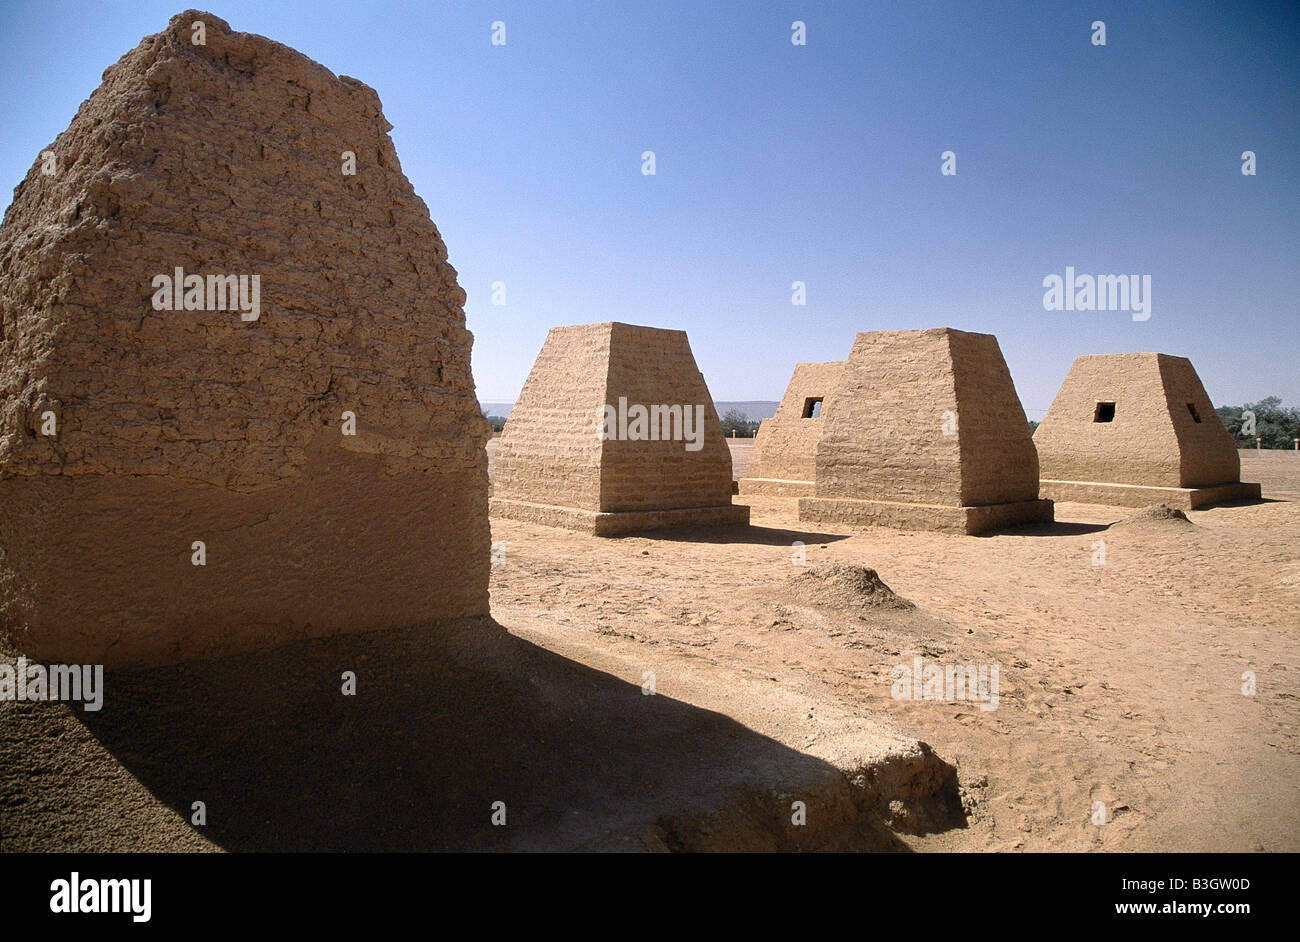 The so-called Hattia Pyramids where important people and rulers of the Garama Kingdom were interred in the Sahara Desert, Libya. Stock Photo